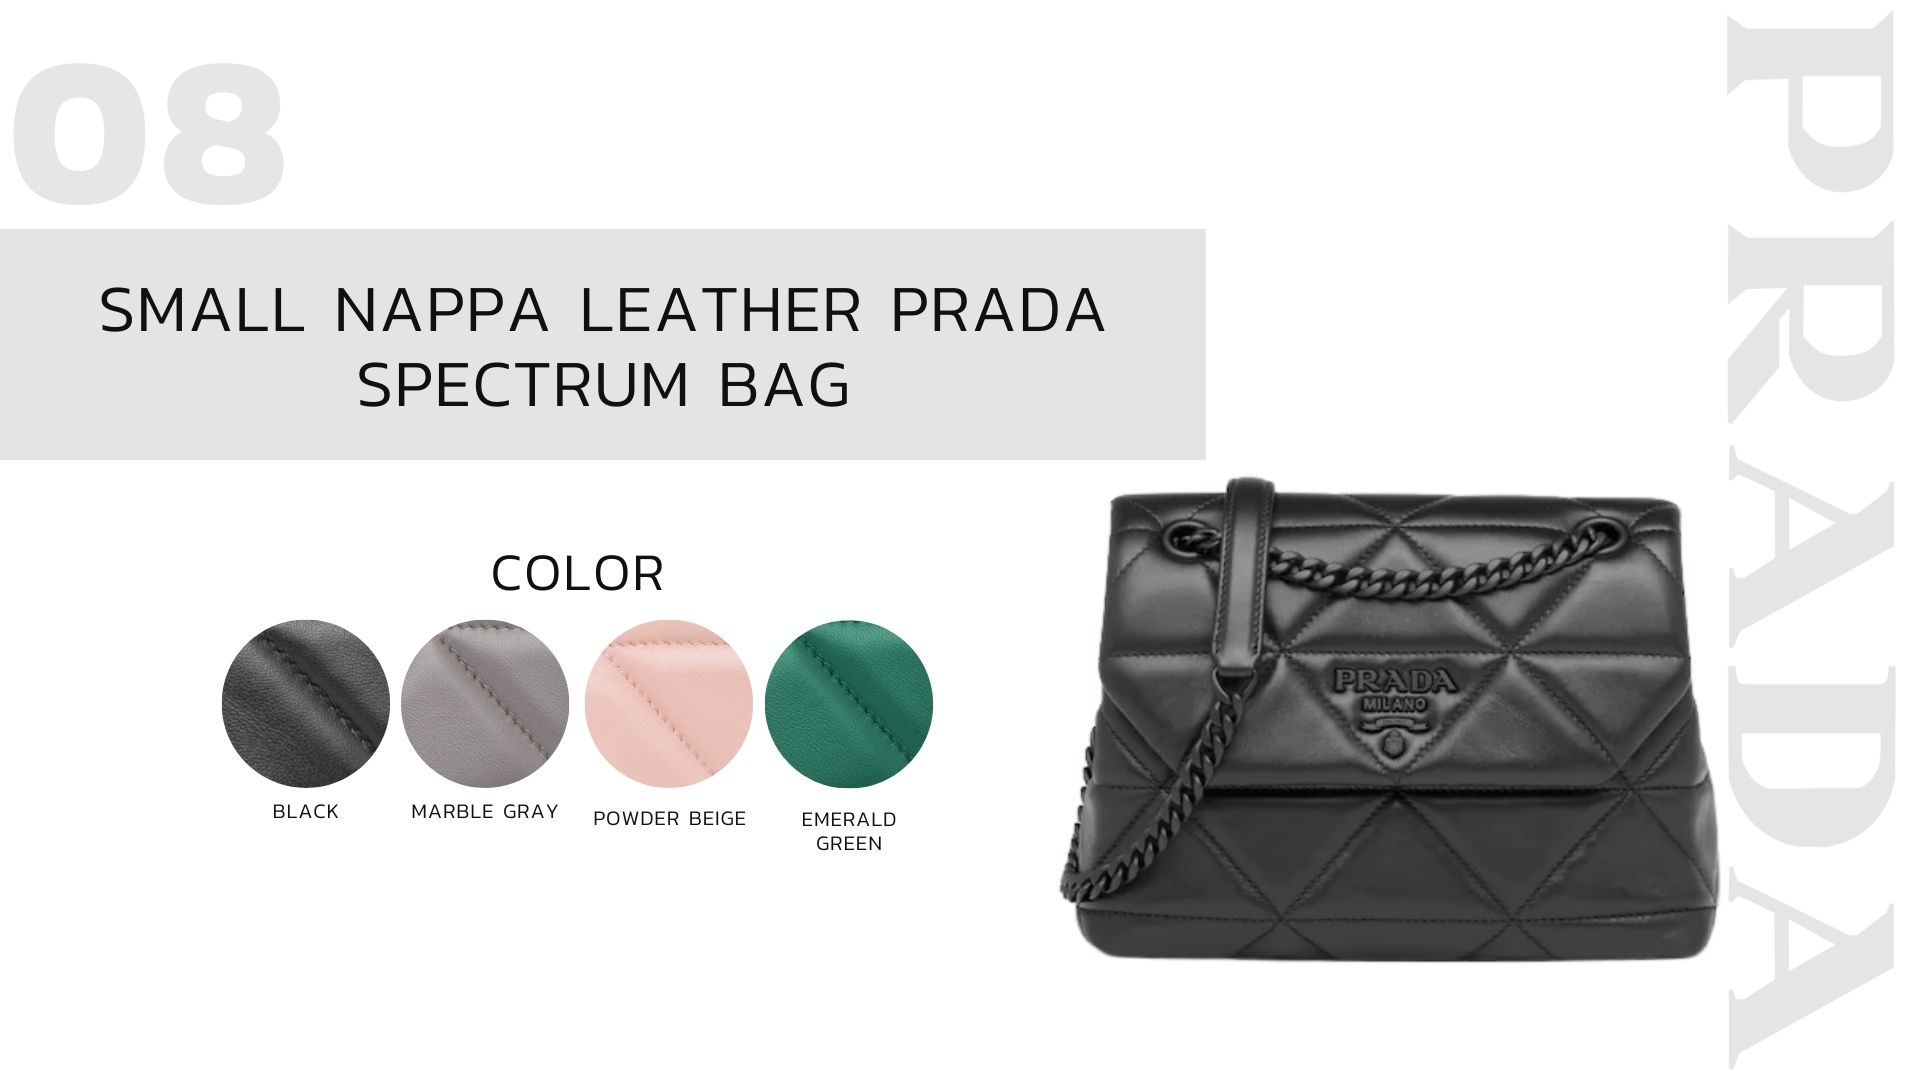 Small Nappa Leather Prada Spectrum Bag